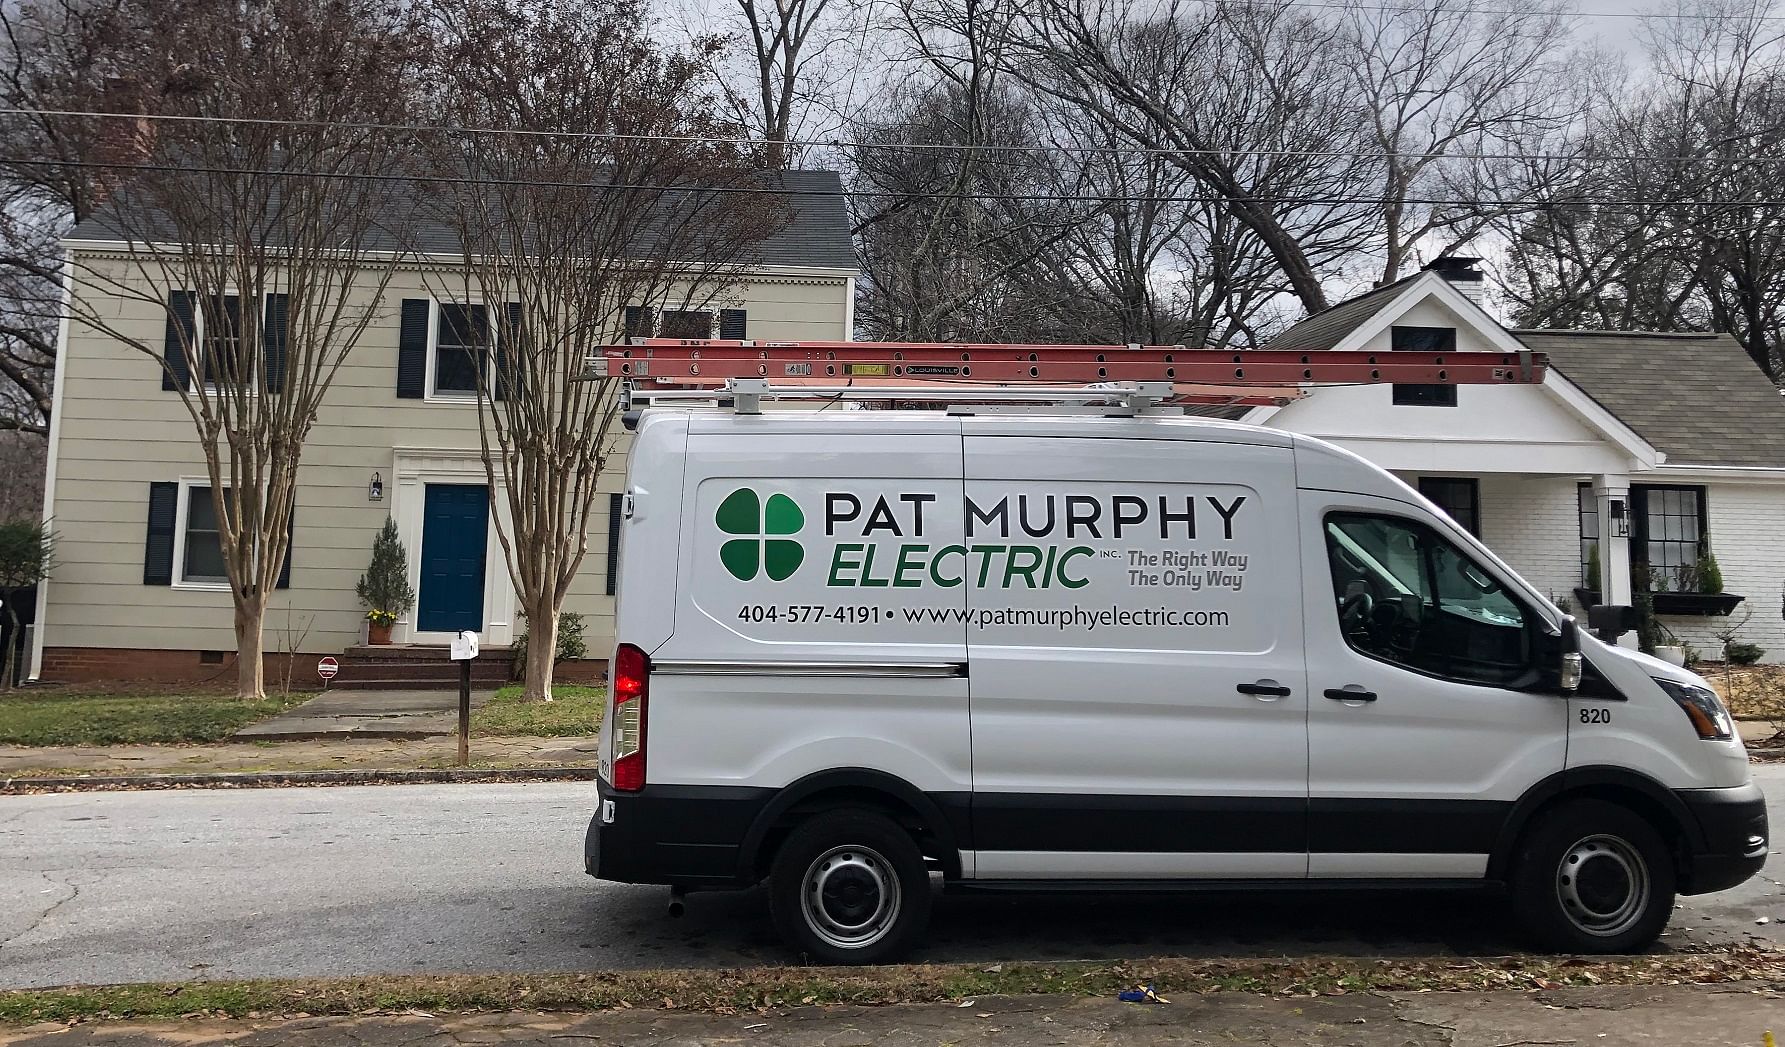 Pat Murphy Electric culture